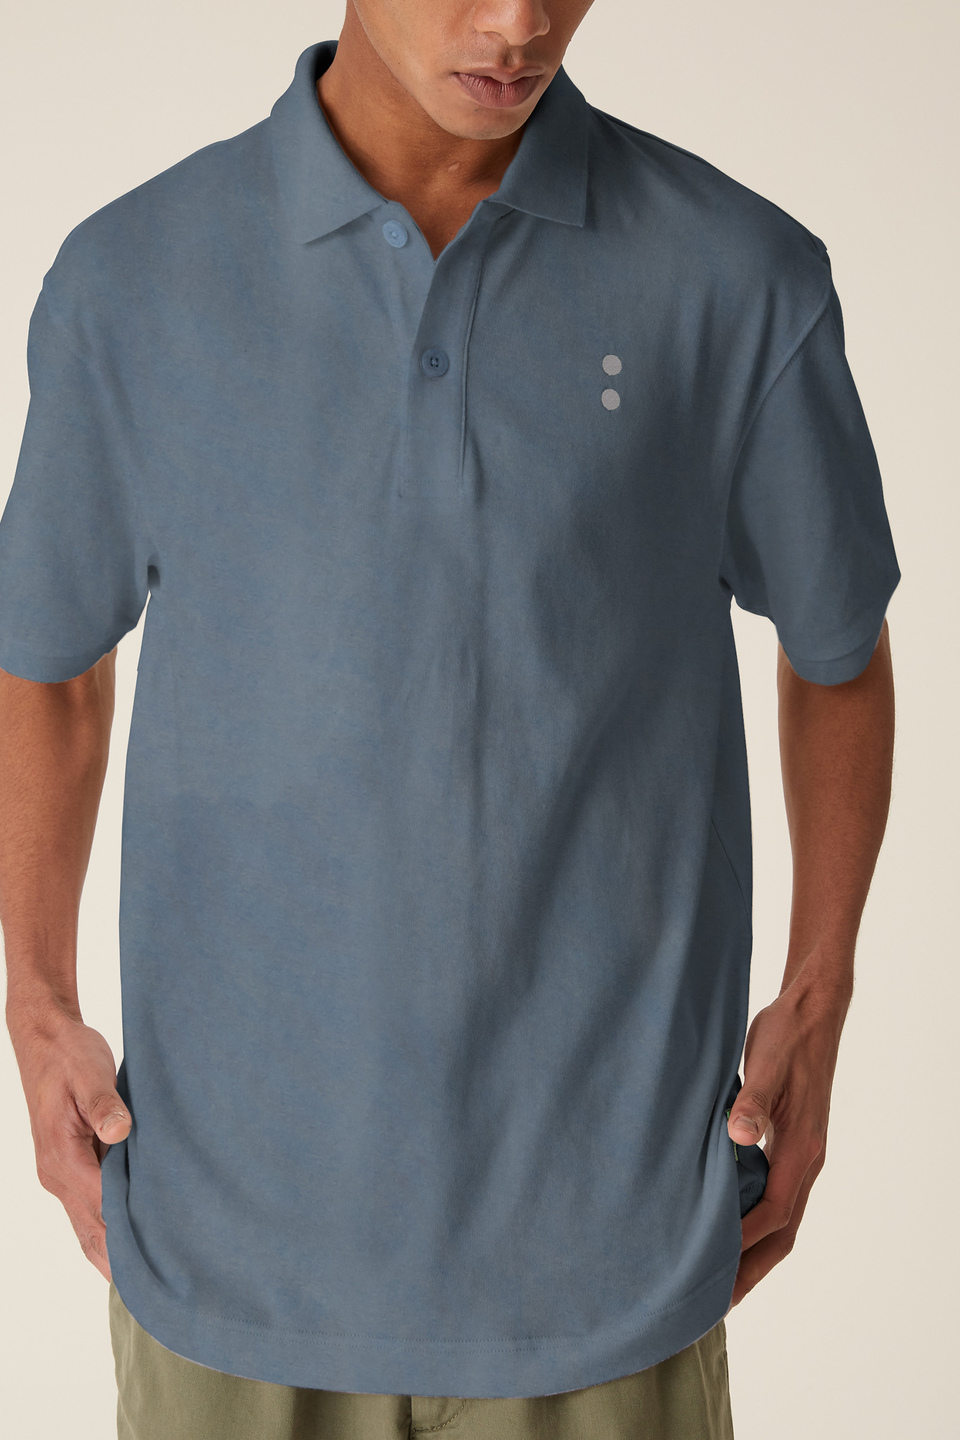 LMRTN cotton polo shirt | La Martina - Official Online Shop